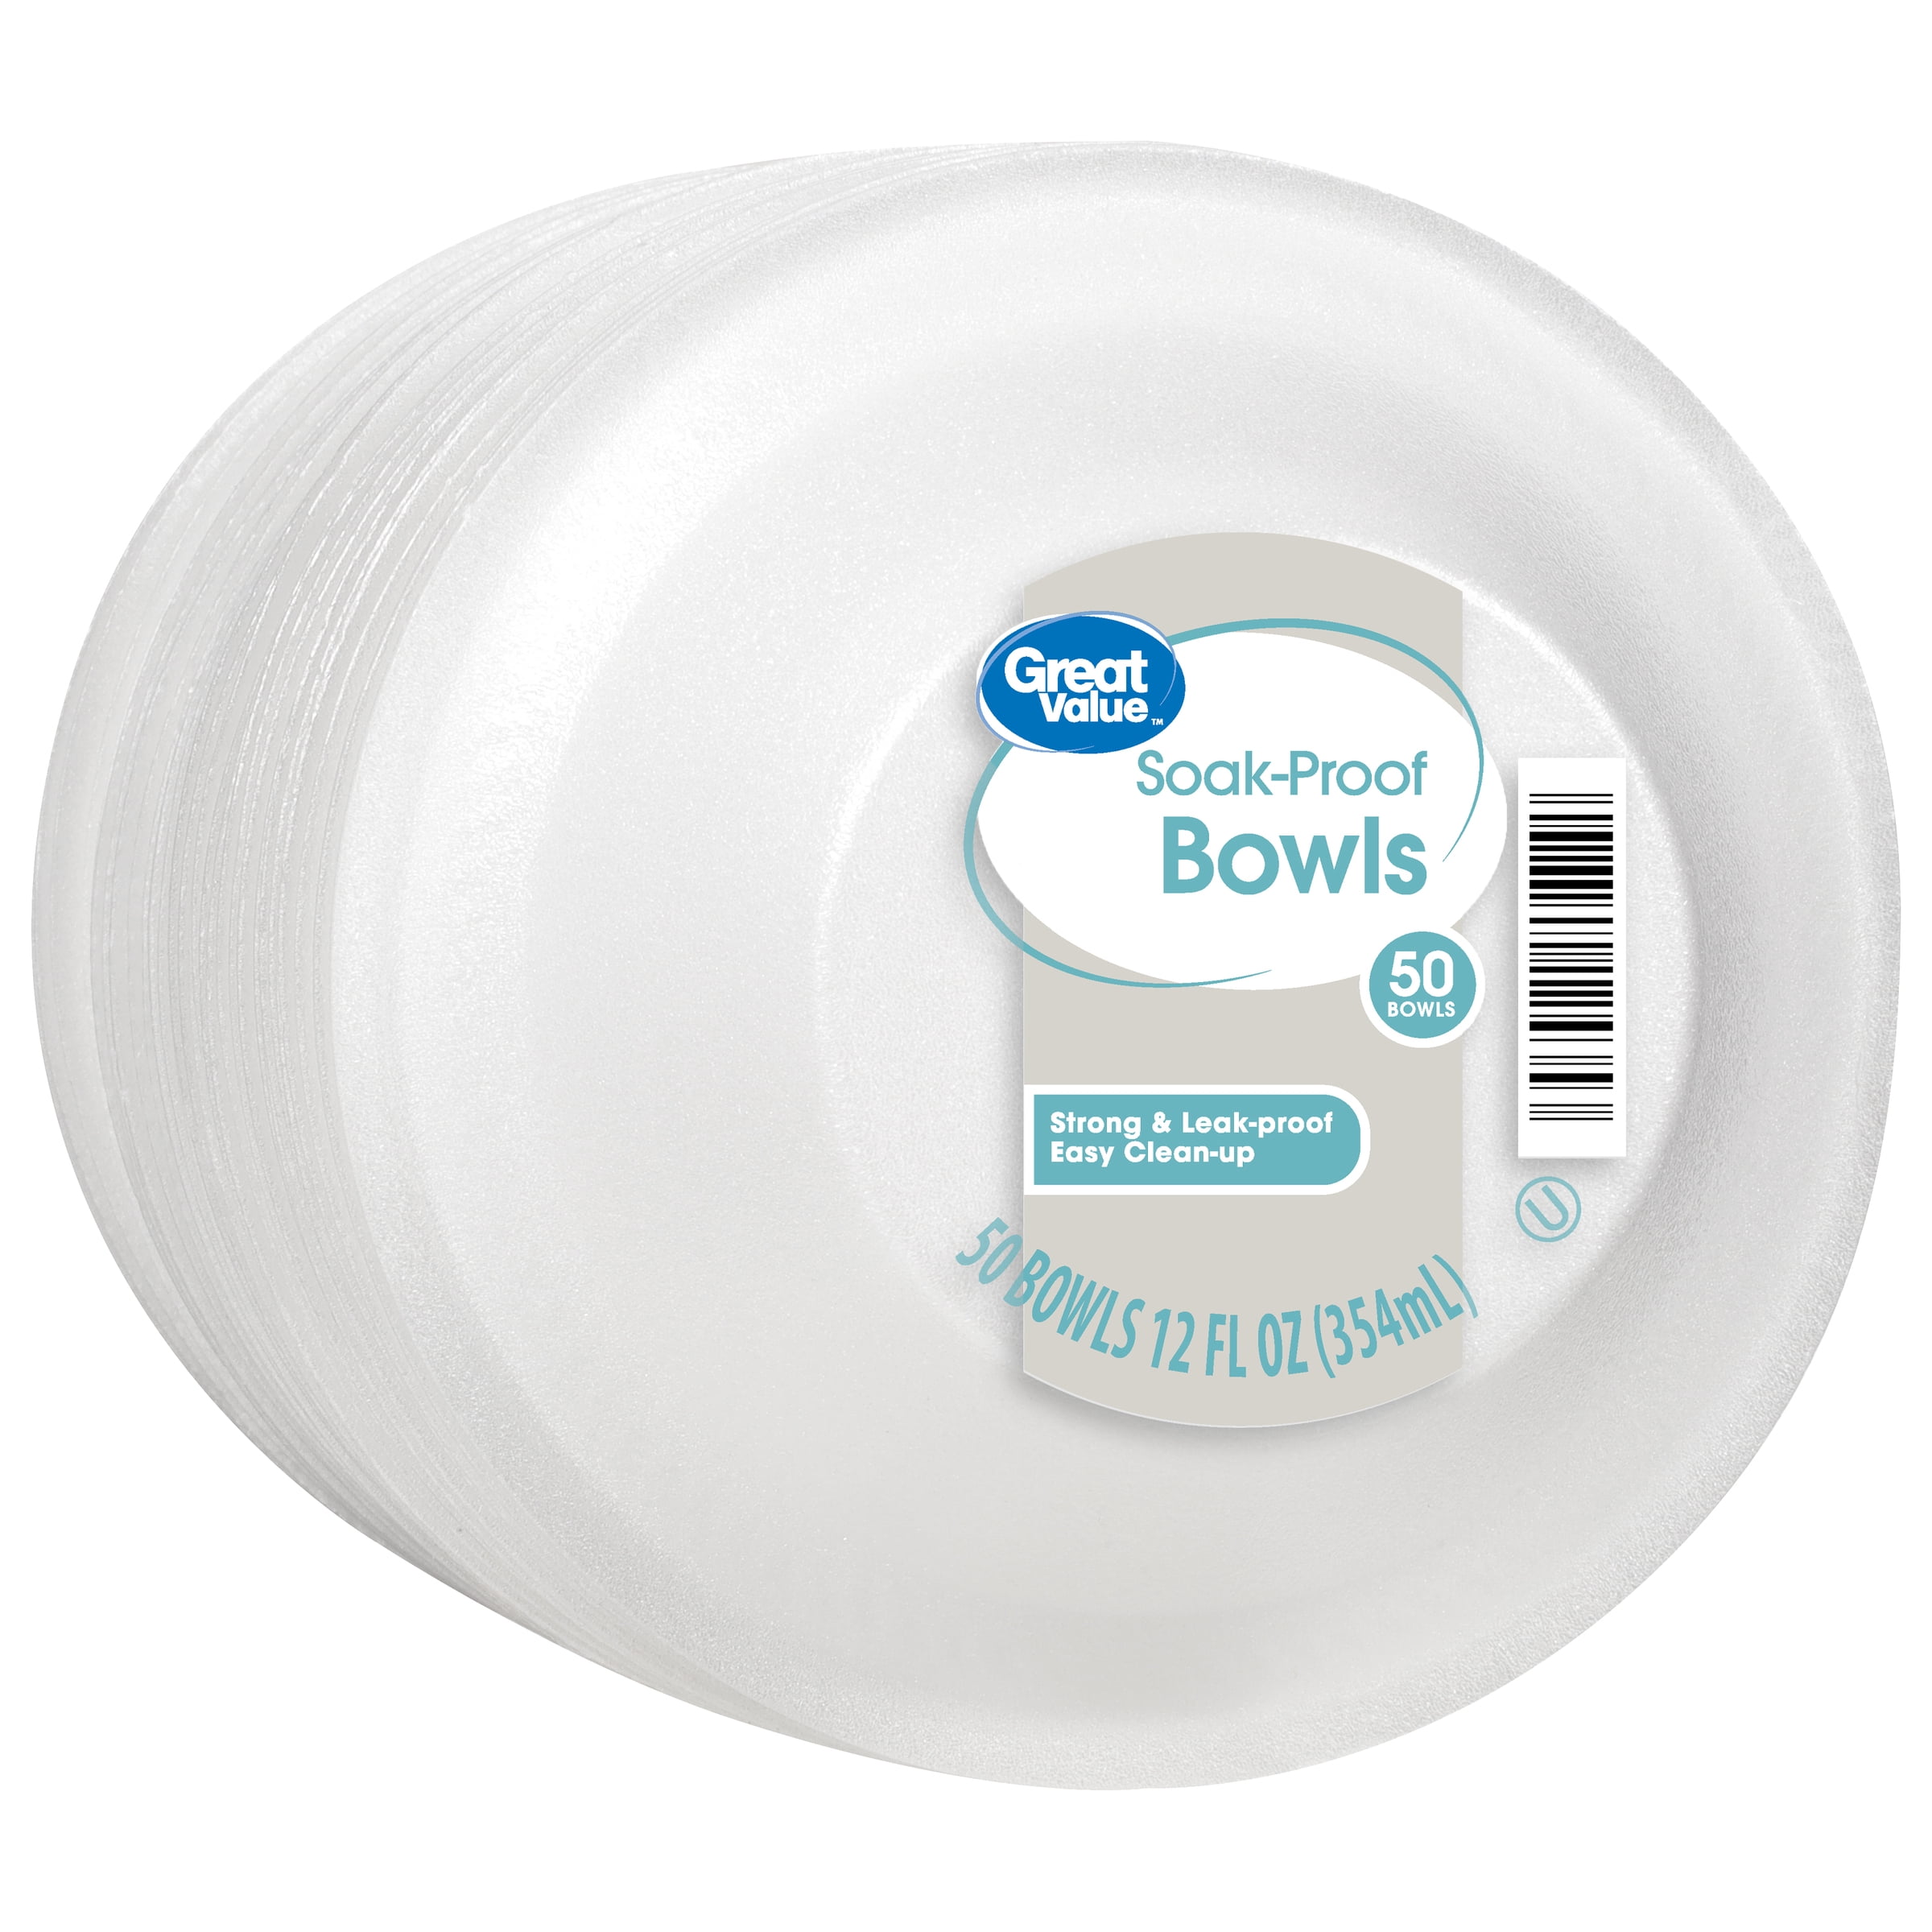 Product Categories Foam Bowls